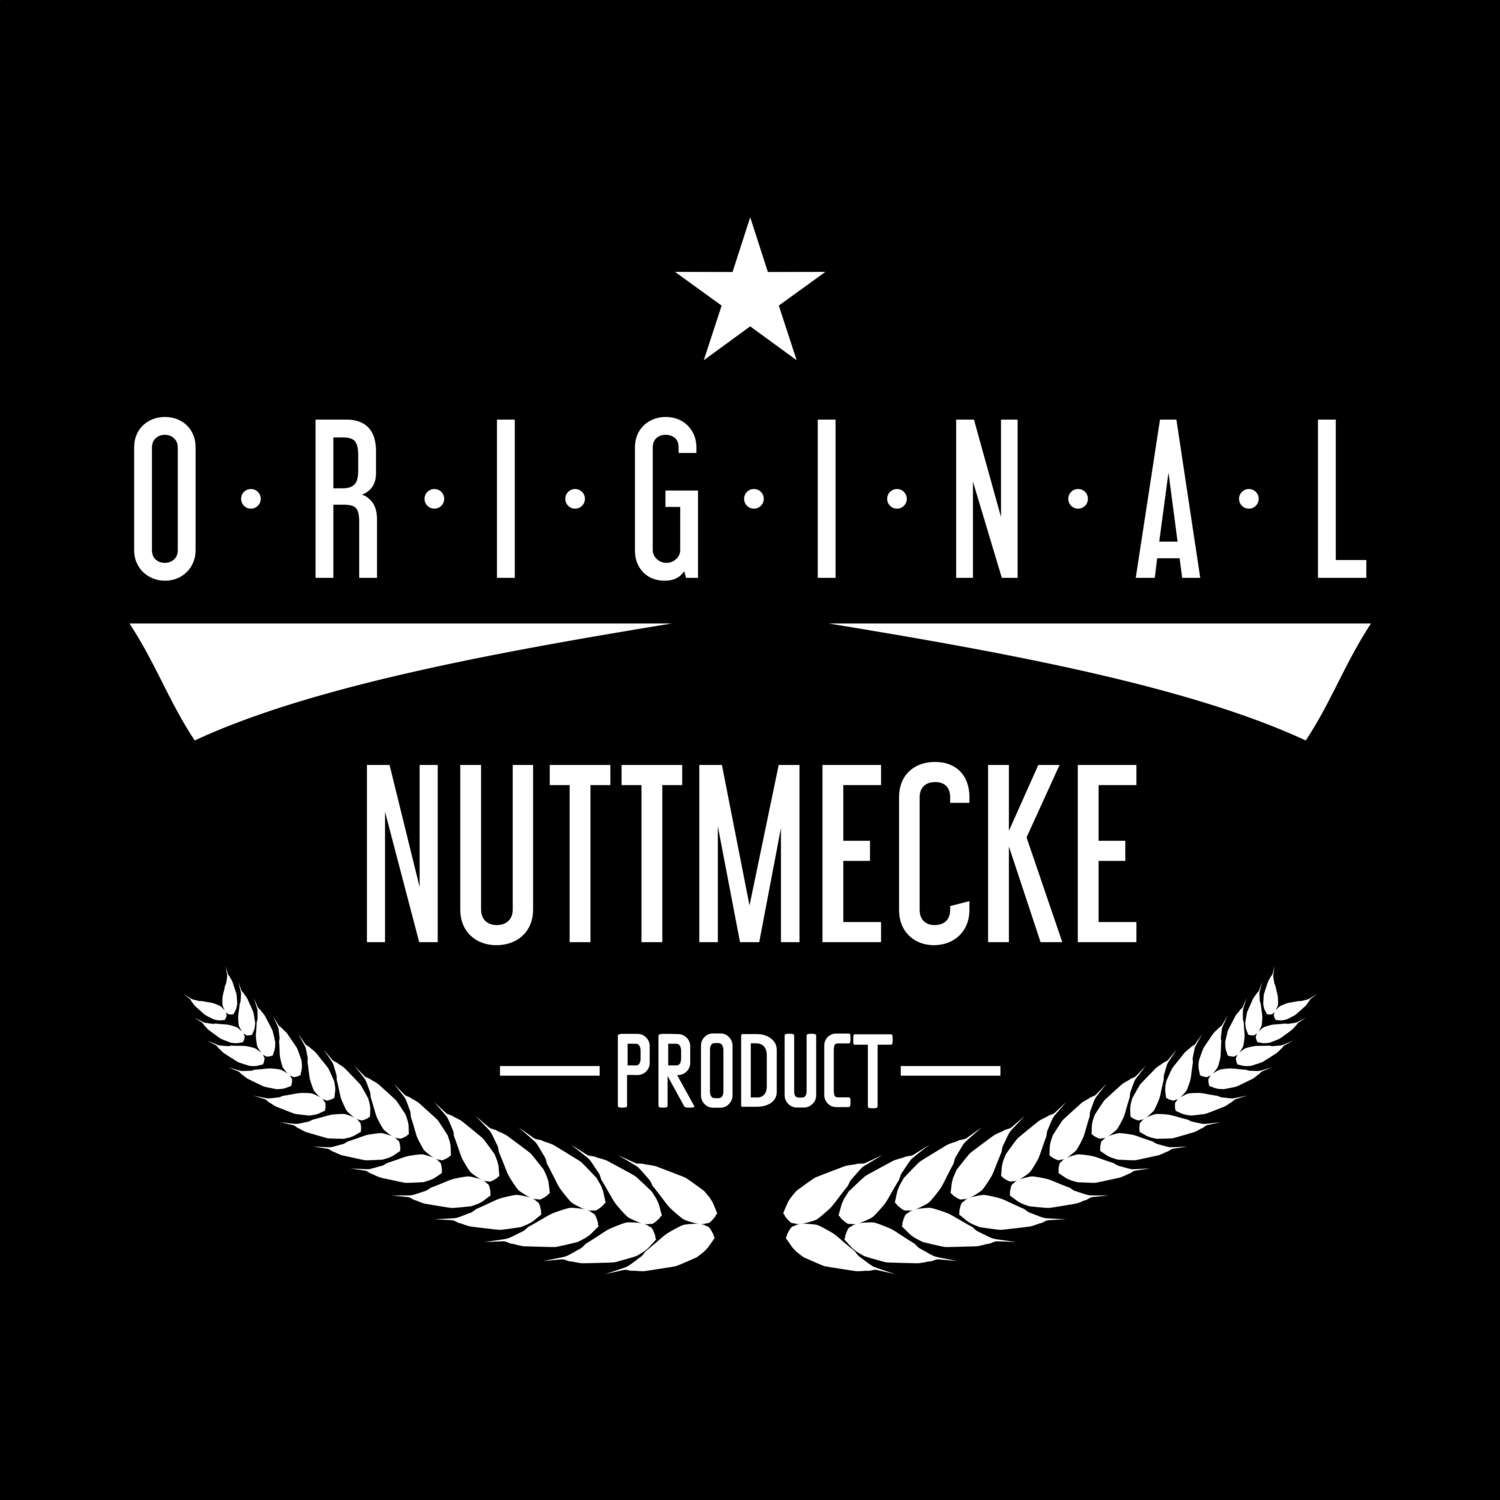 Nuttmecke T-Shirt »Original Product«